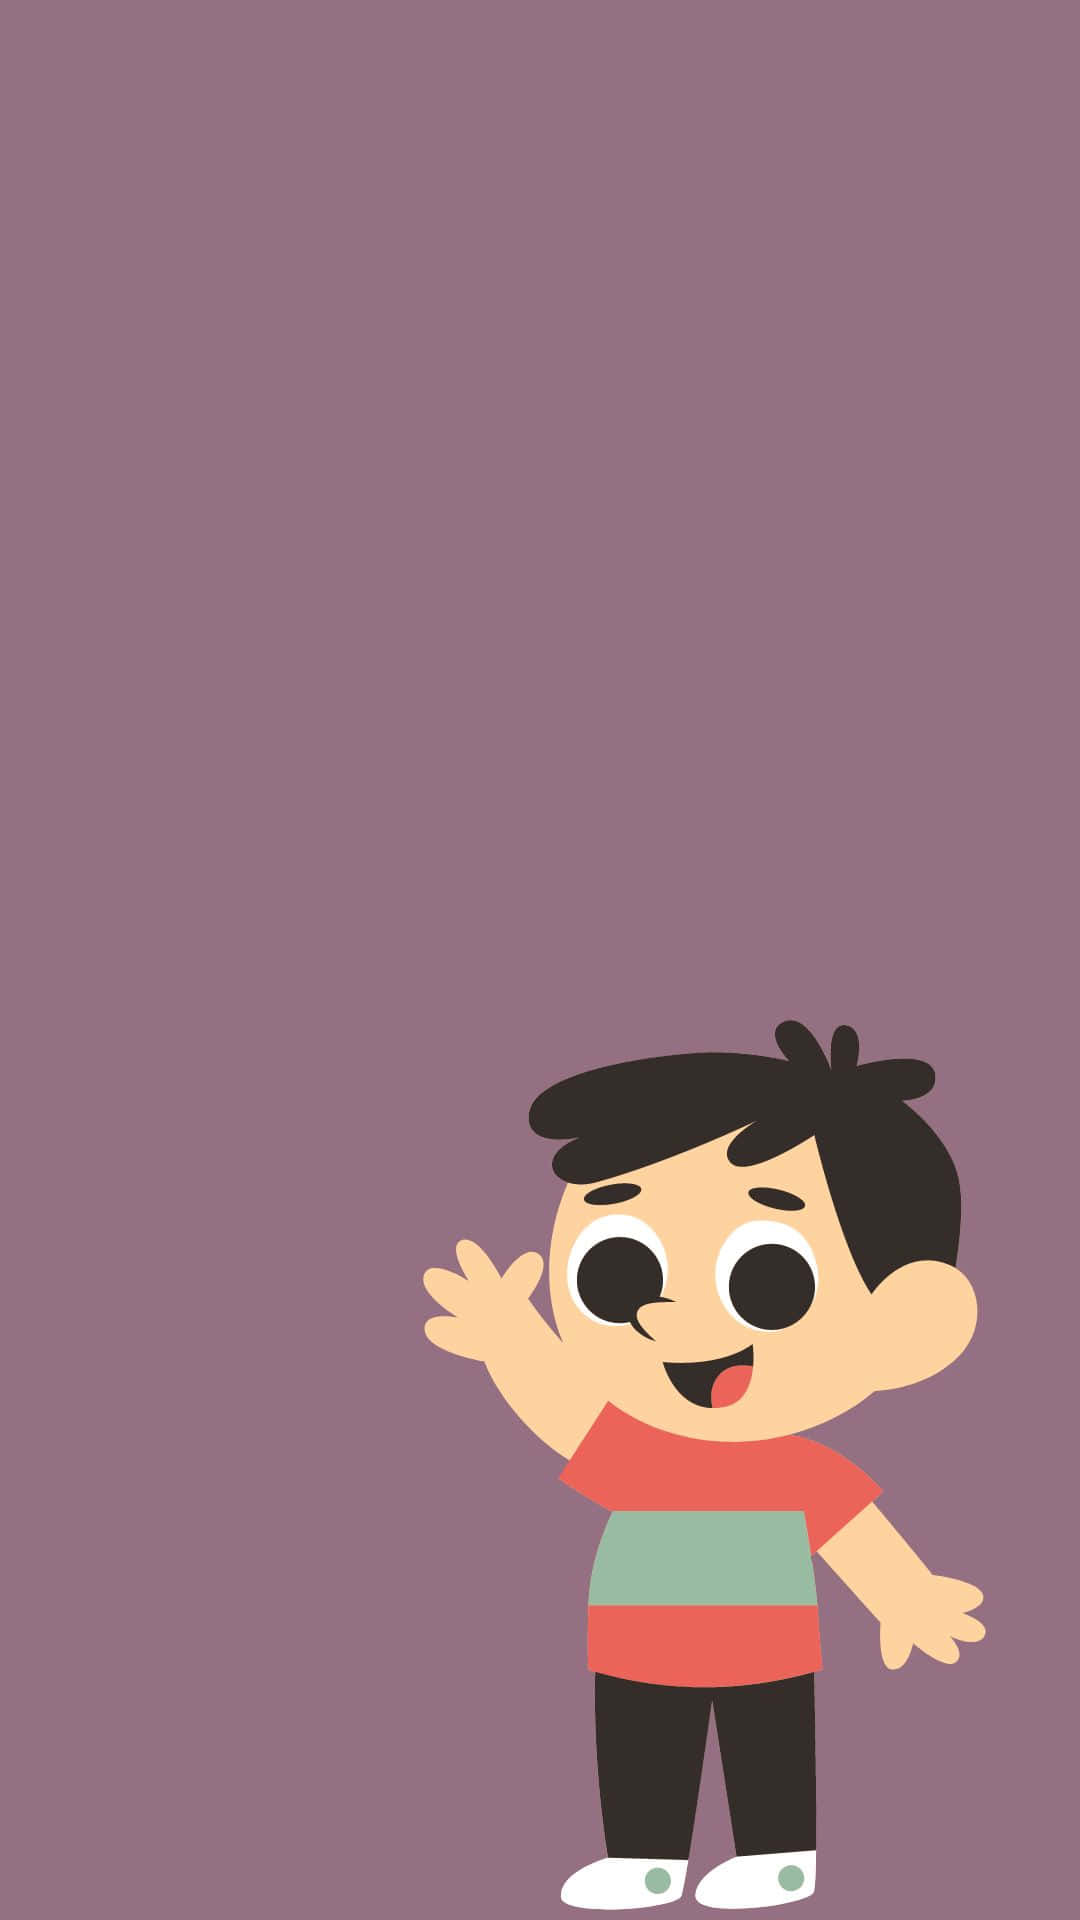 Cheerful Cartoon Boy Waving Hello Background